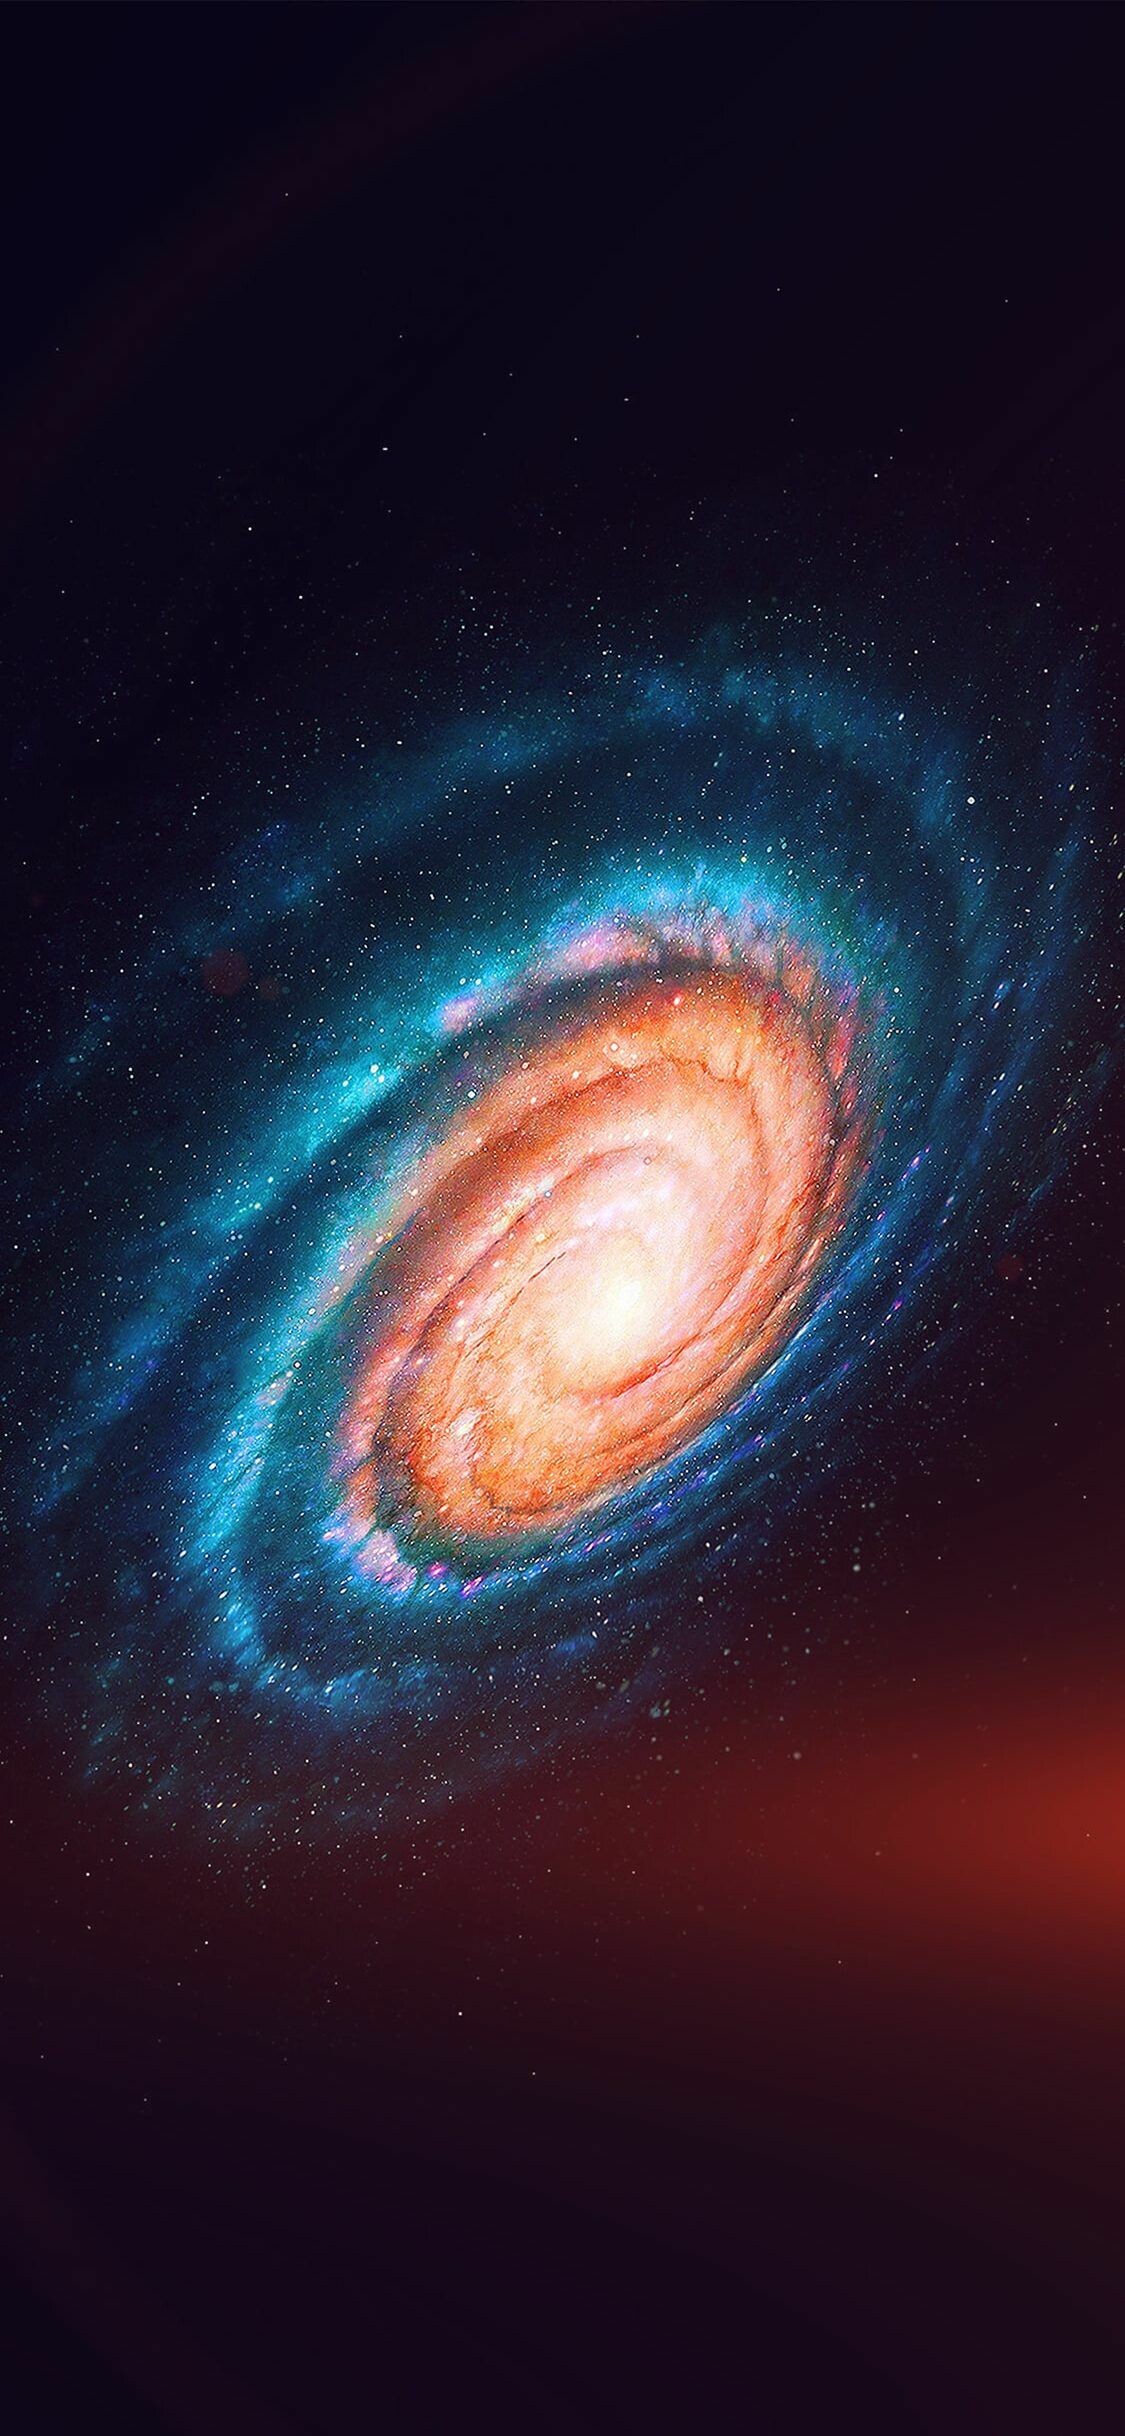 Outer Space: Zodiacal light, Interstellar radiation field, Extragalactic nebula. 1130x2440 HD Wallpaper.